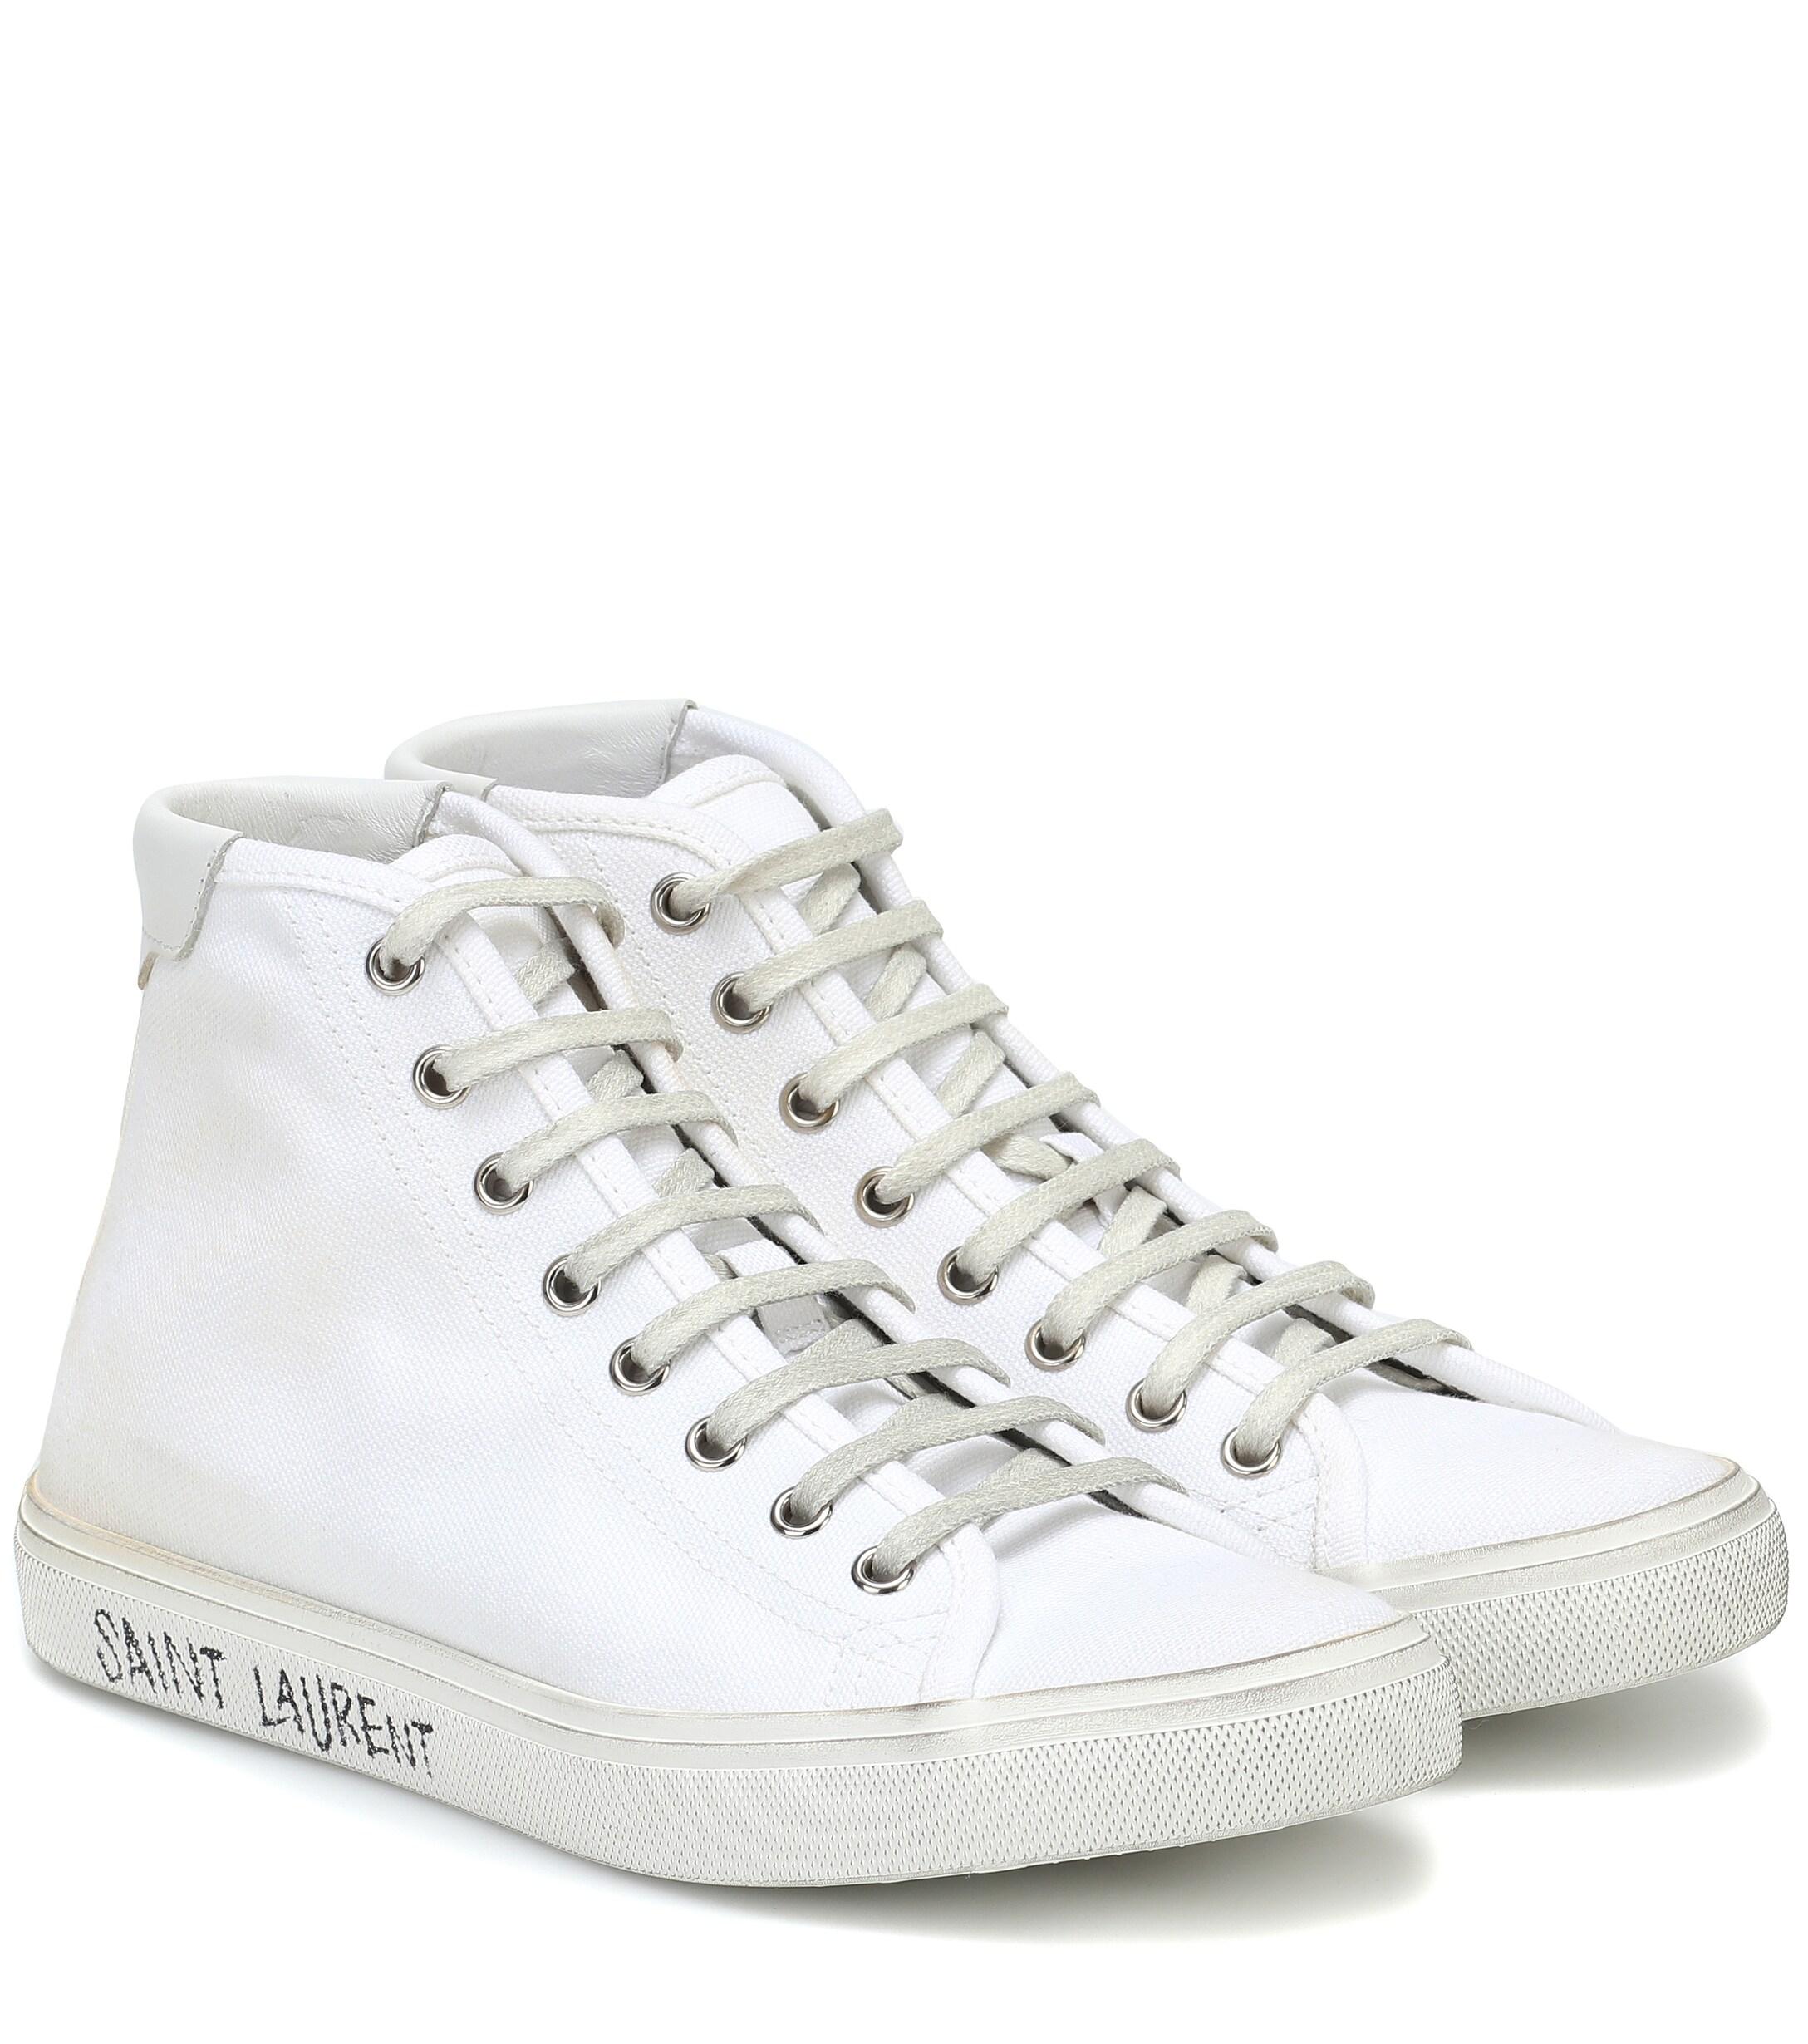 Saint Laurent Malibu Canvas Sneakers in White - Lyst